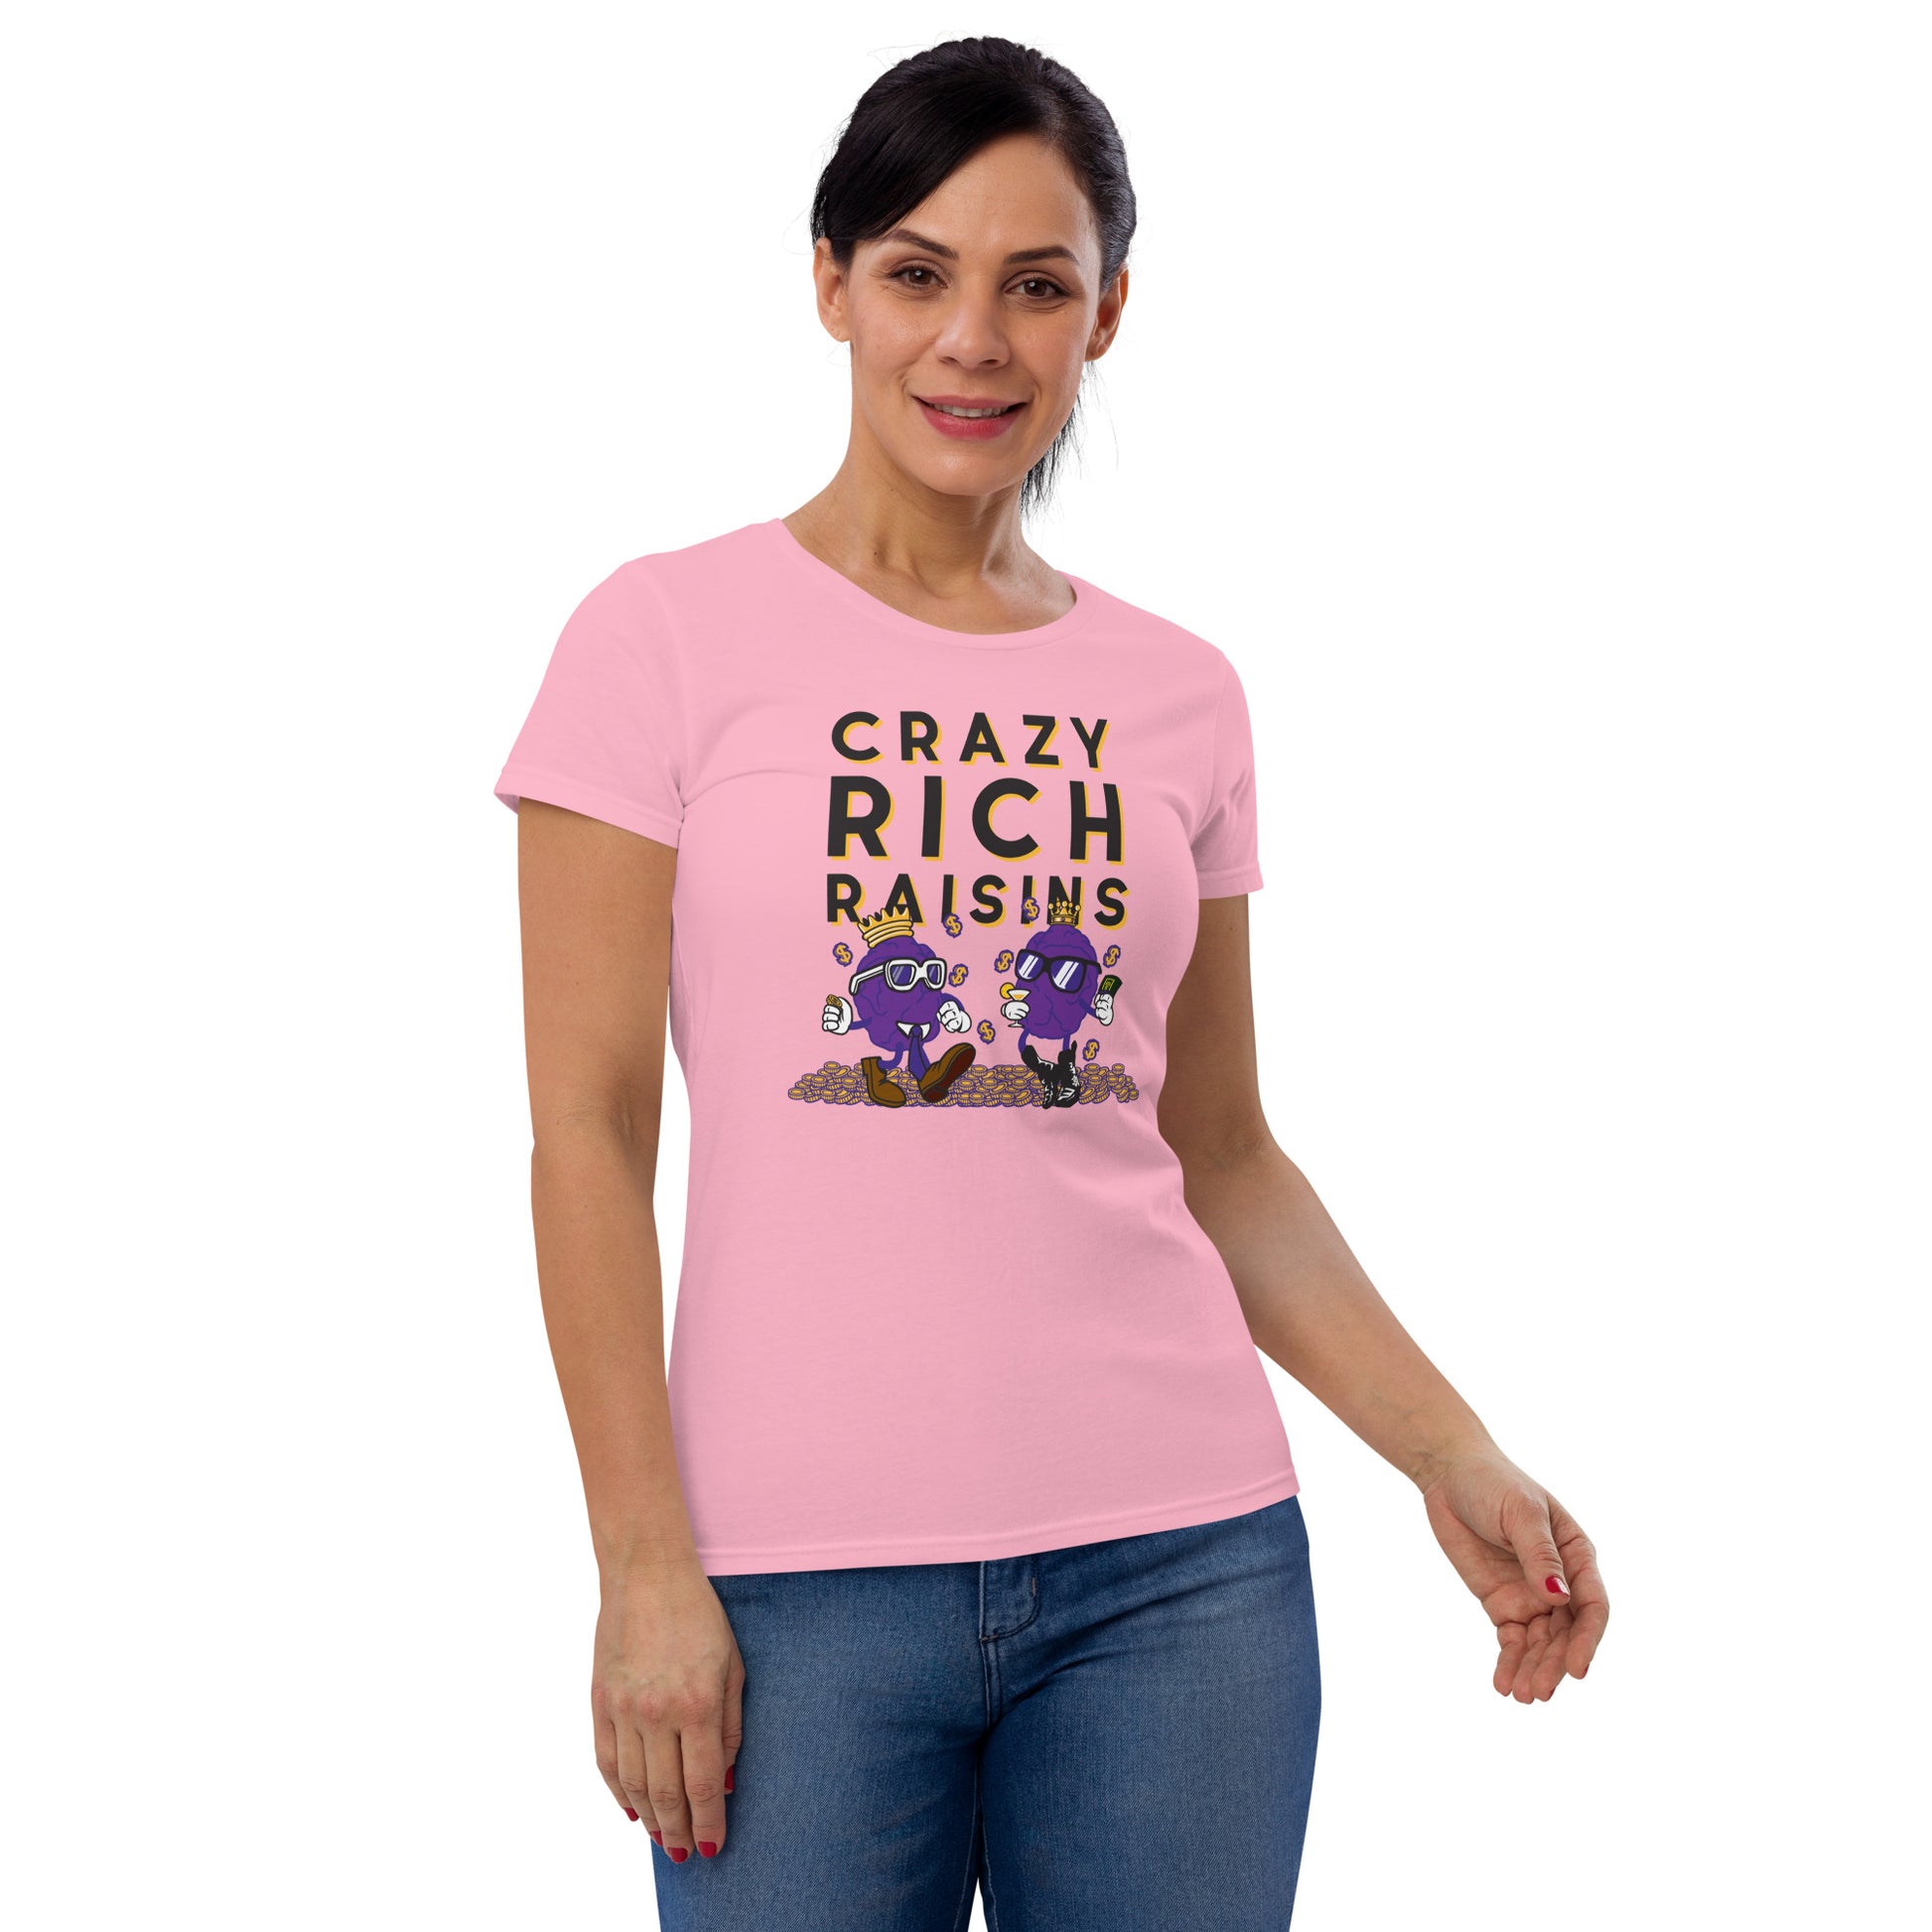 Movie The Food - Crazy Rich Raisins Women's T-Shirt - Charity Pink - Model Back